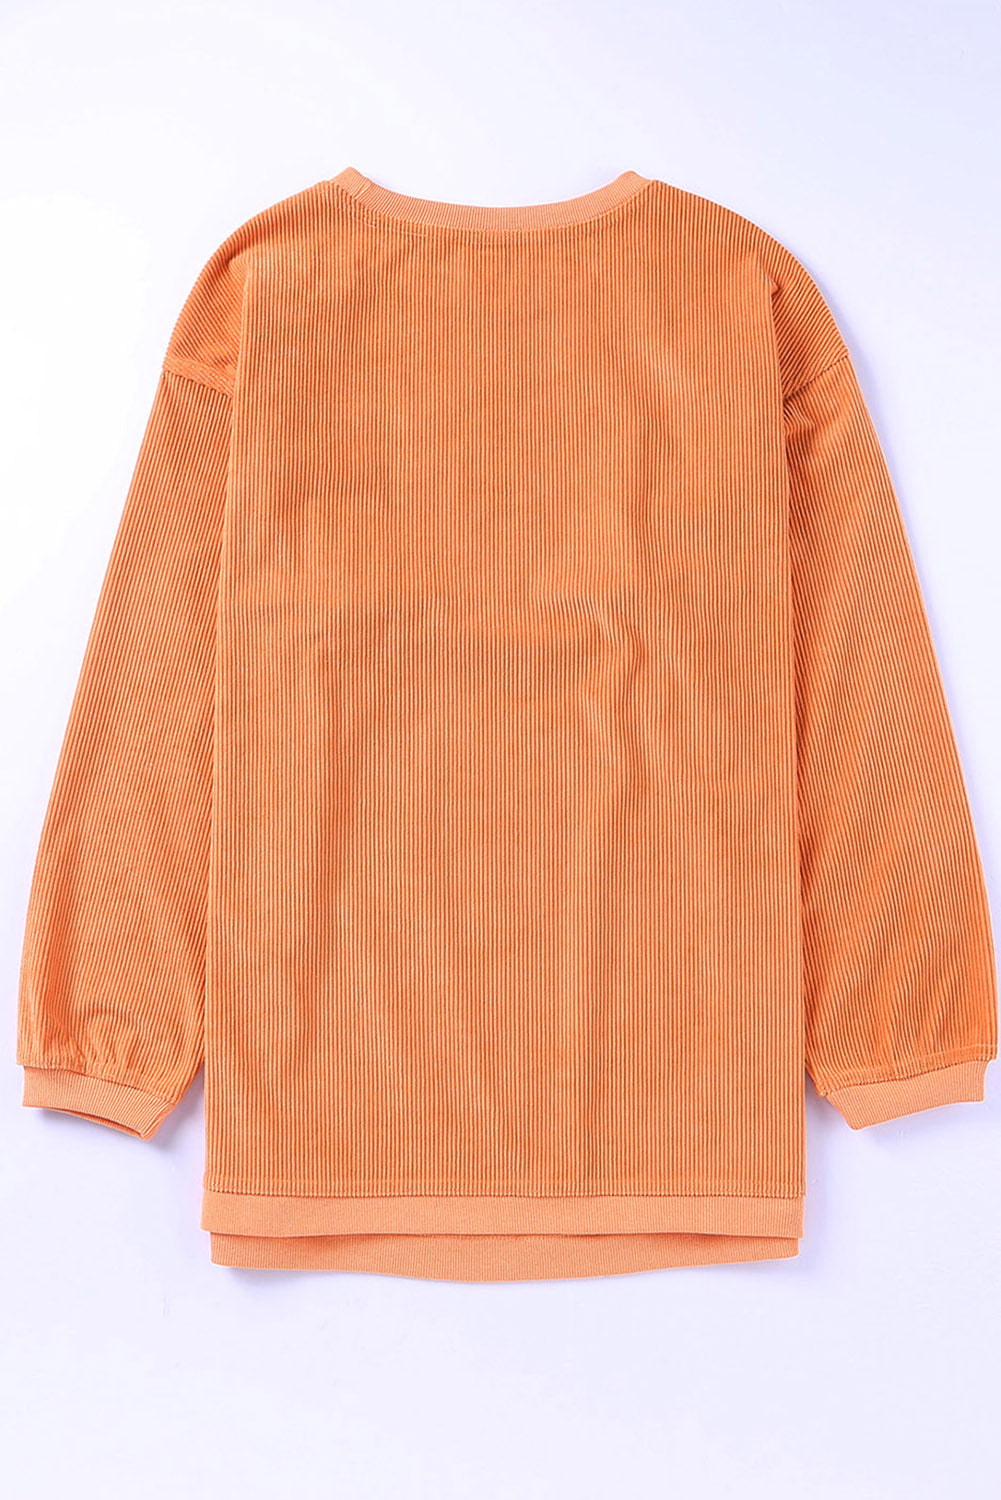 WITCH PLEASE Graphic Dropped Shoulder Sweatshirt - Lola Cerina Boutique